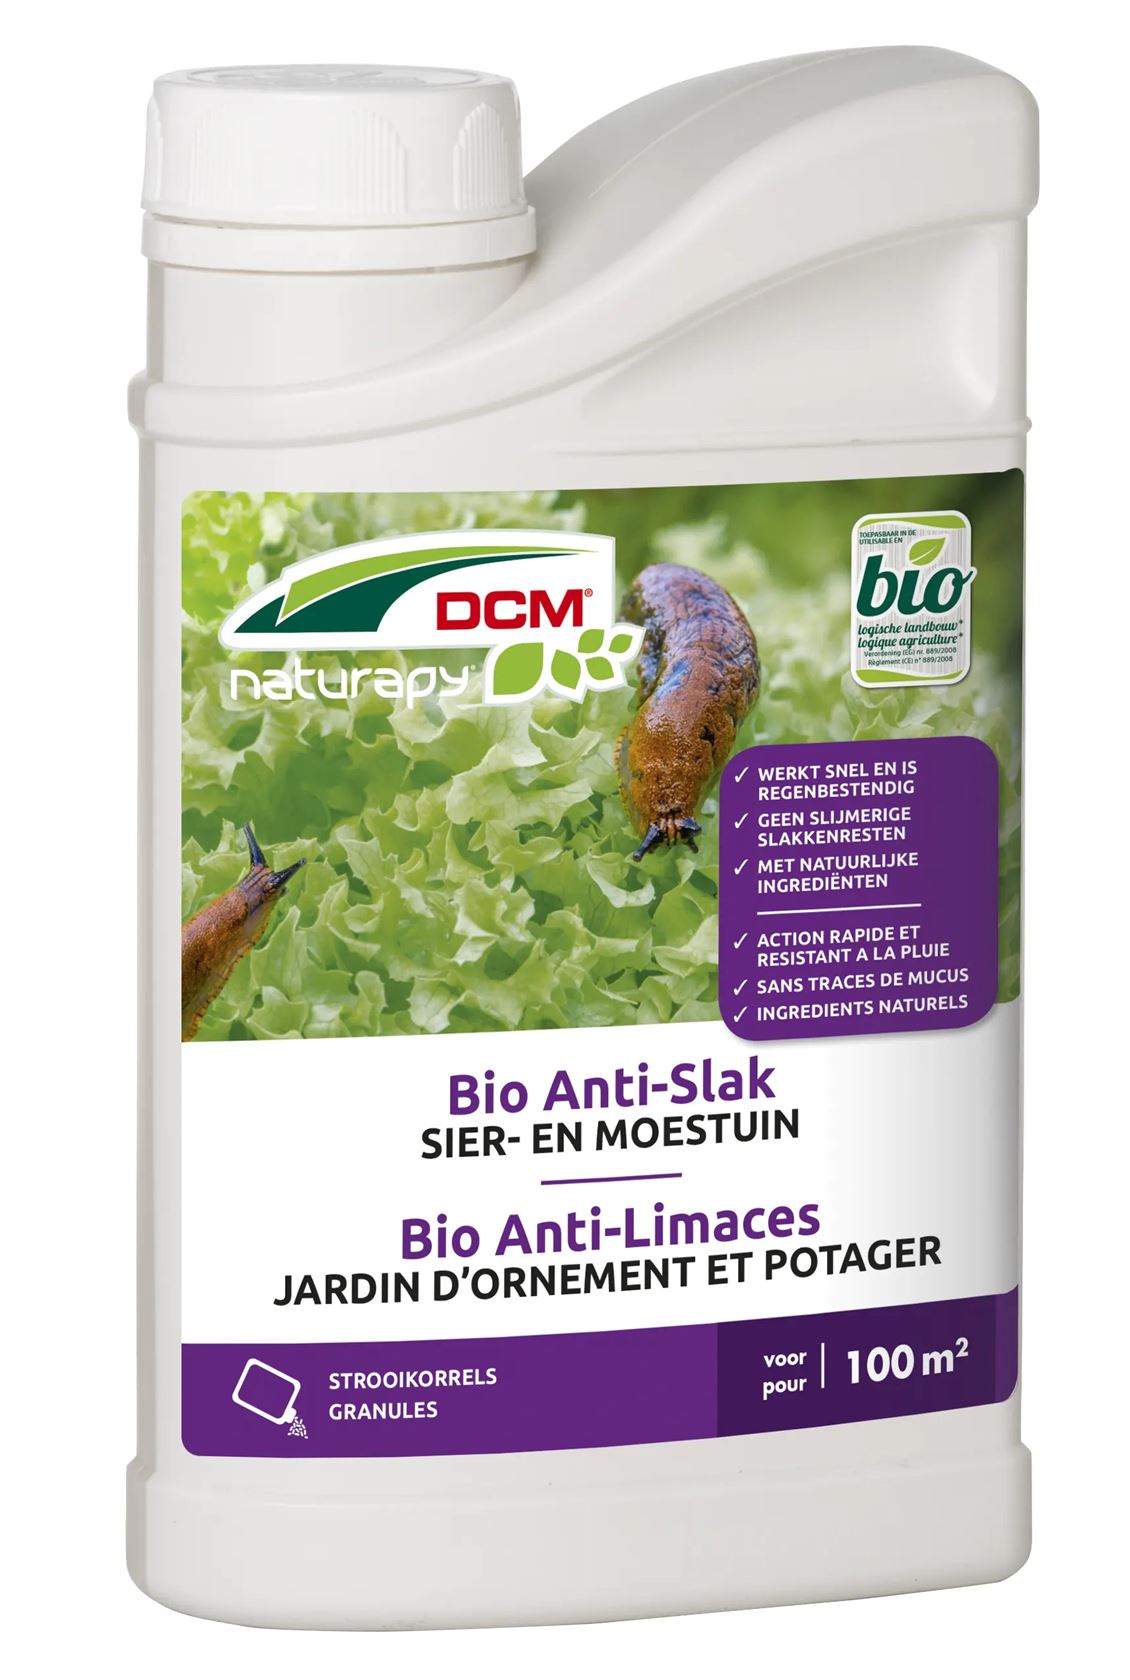 Bio-anti-slak-500gr-100m-Biologische-slakkenkorrels-dmv-ijzerfosfaat